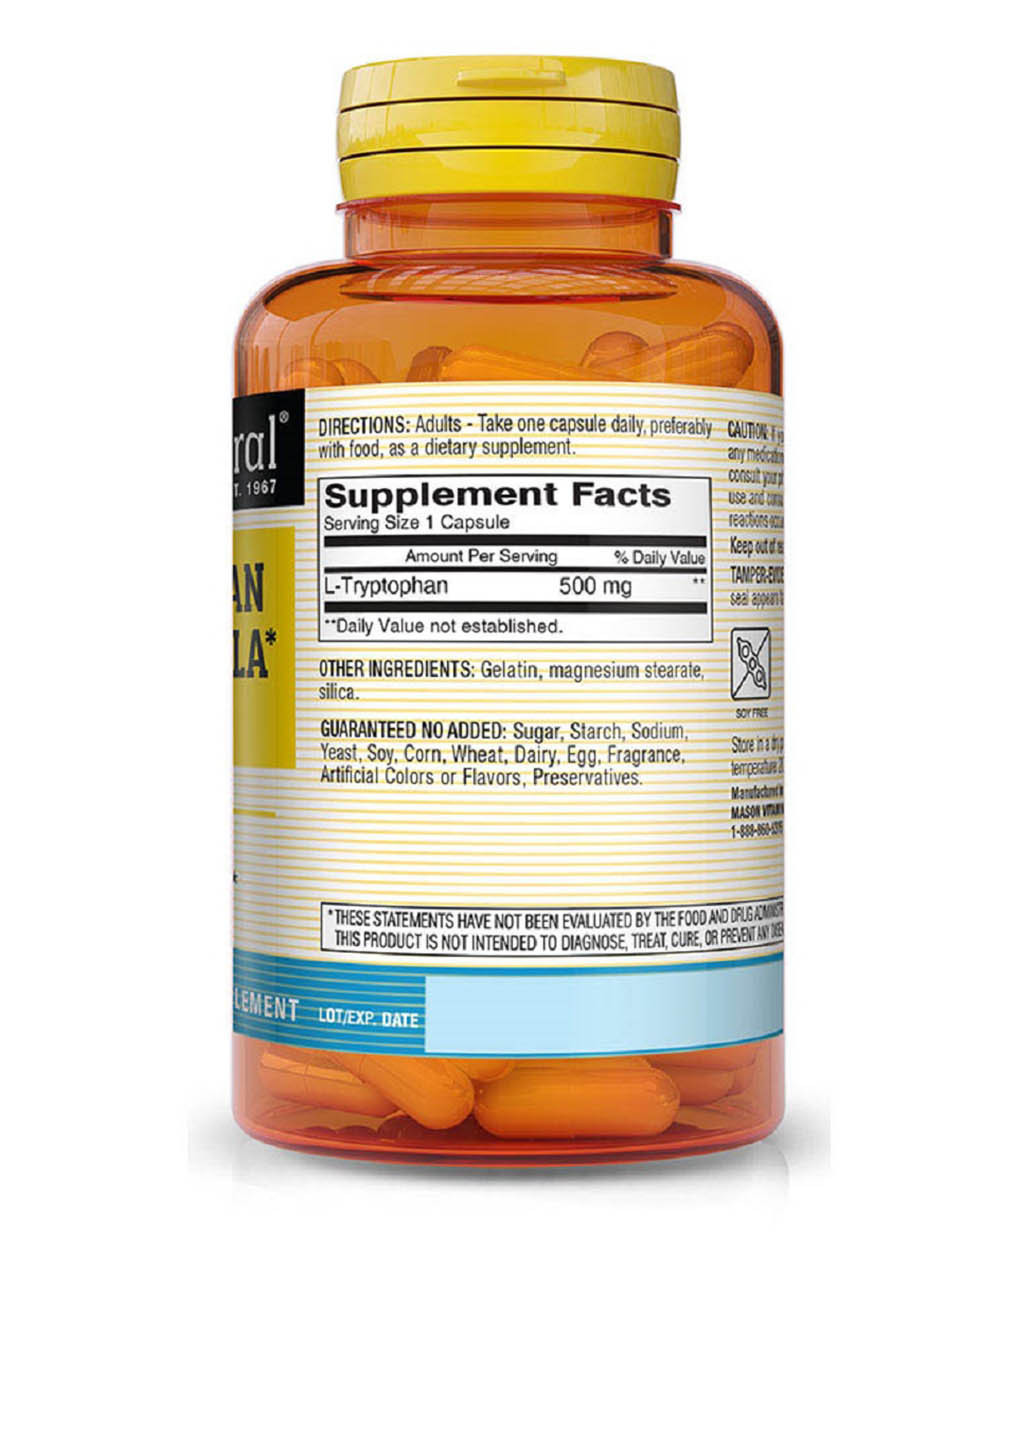 L-триптофан 500 мг формула для сна, 60 (таб.) Mason Natural (251206534)